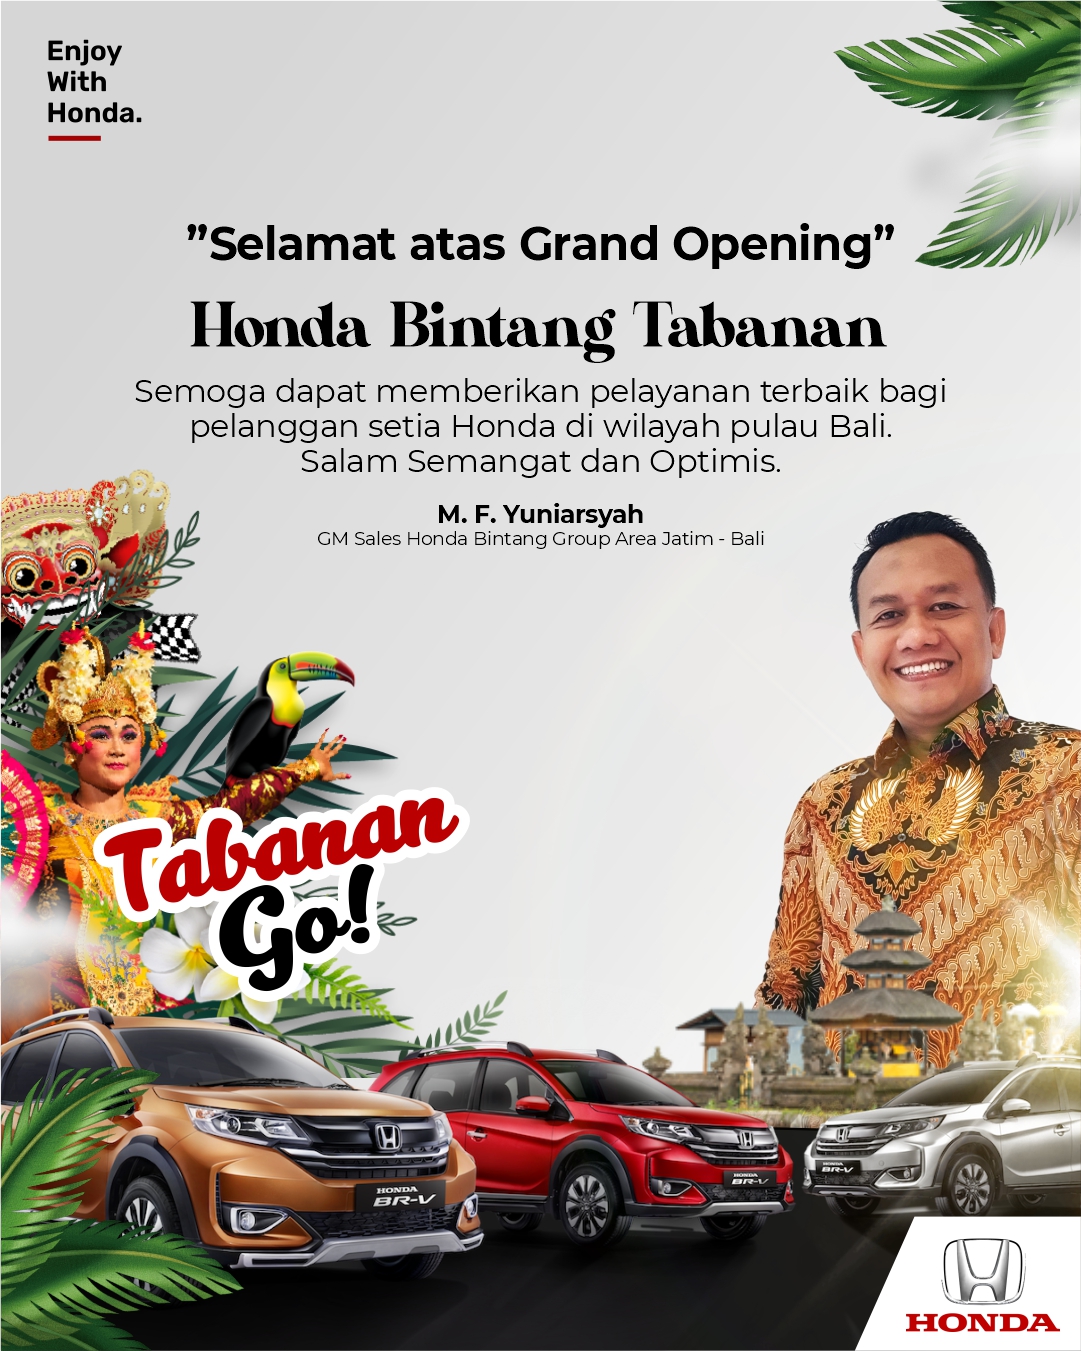 Congratulation, The Grand Opening Of Honda Tabanan